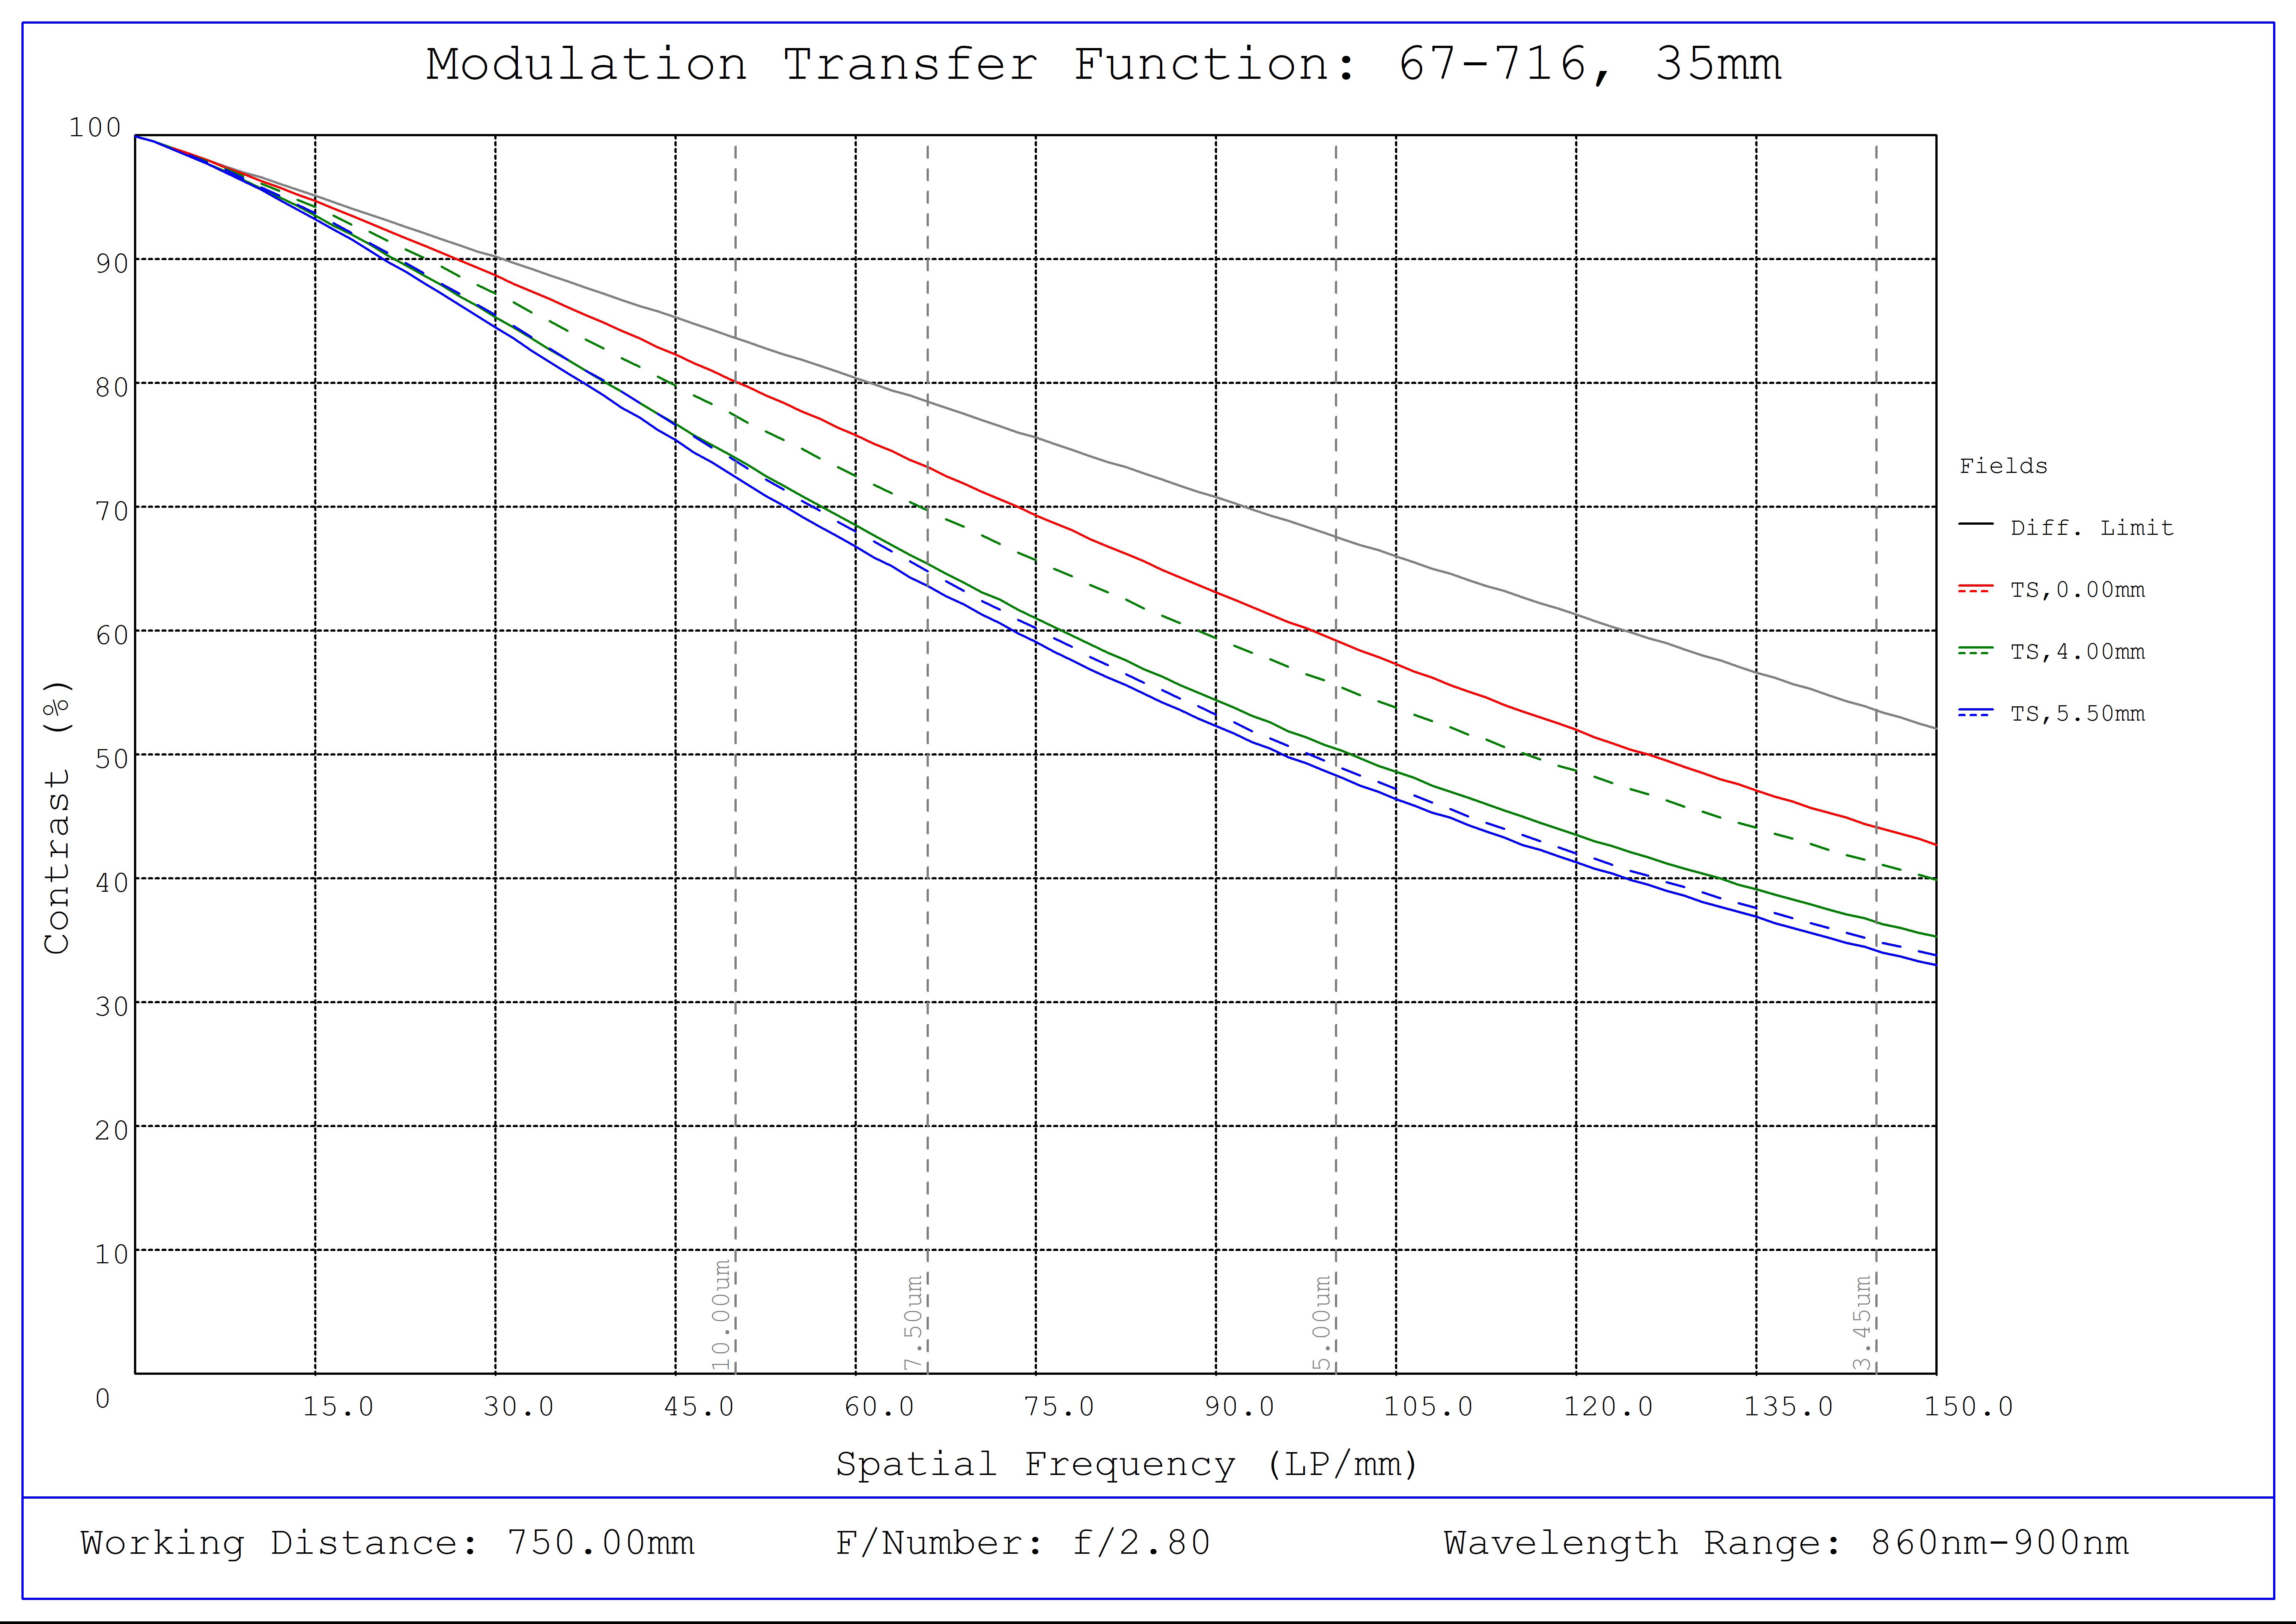 #67-716, 35mm C VIS-NIR Series Fixed Focal Length Lens, Modulated Transfer Function (MTF) Plot (NIR), 750mm Working Distance, f2.8